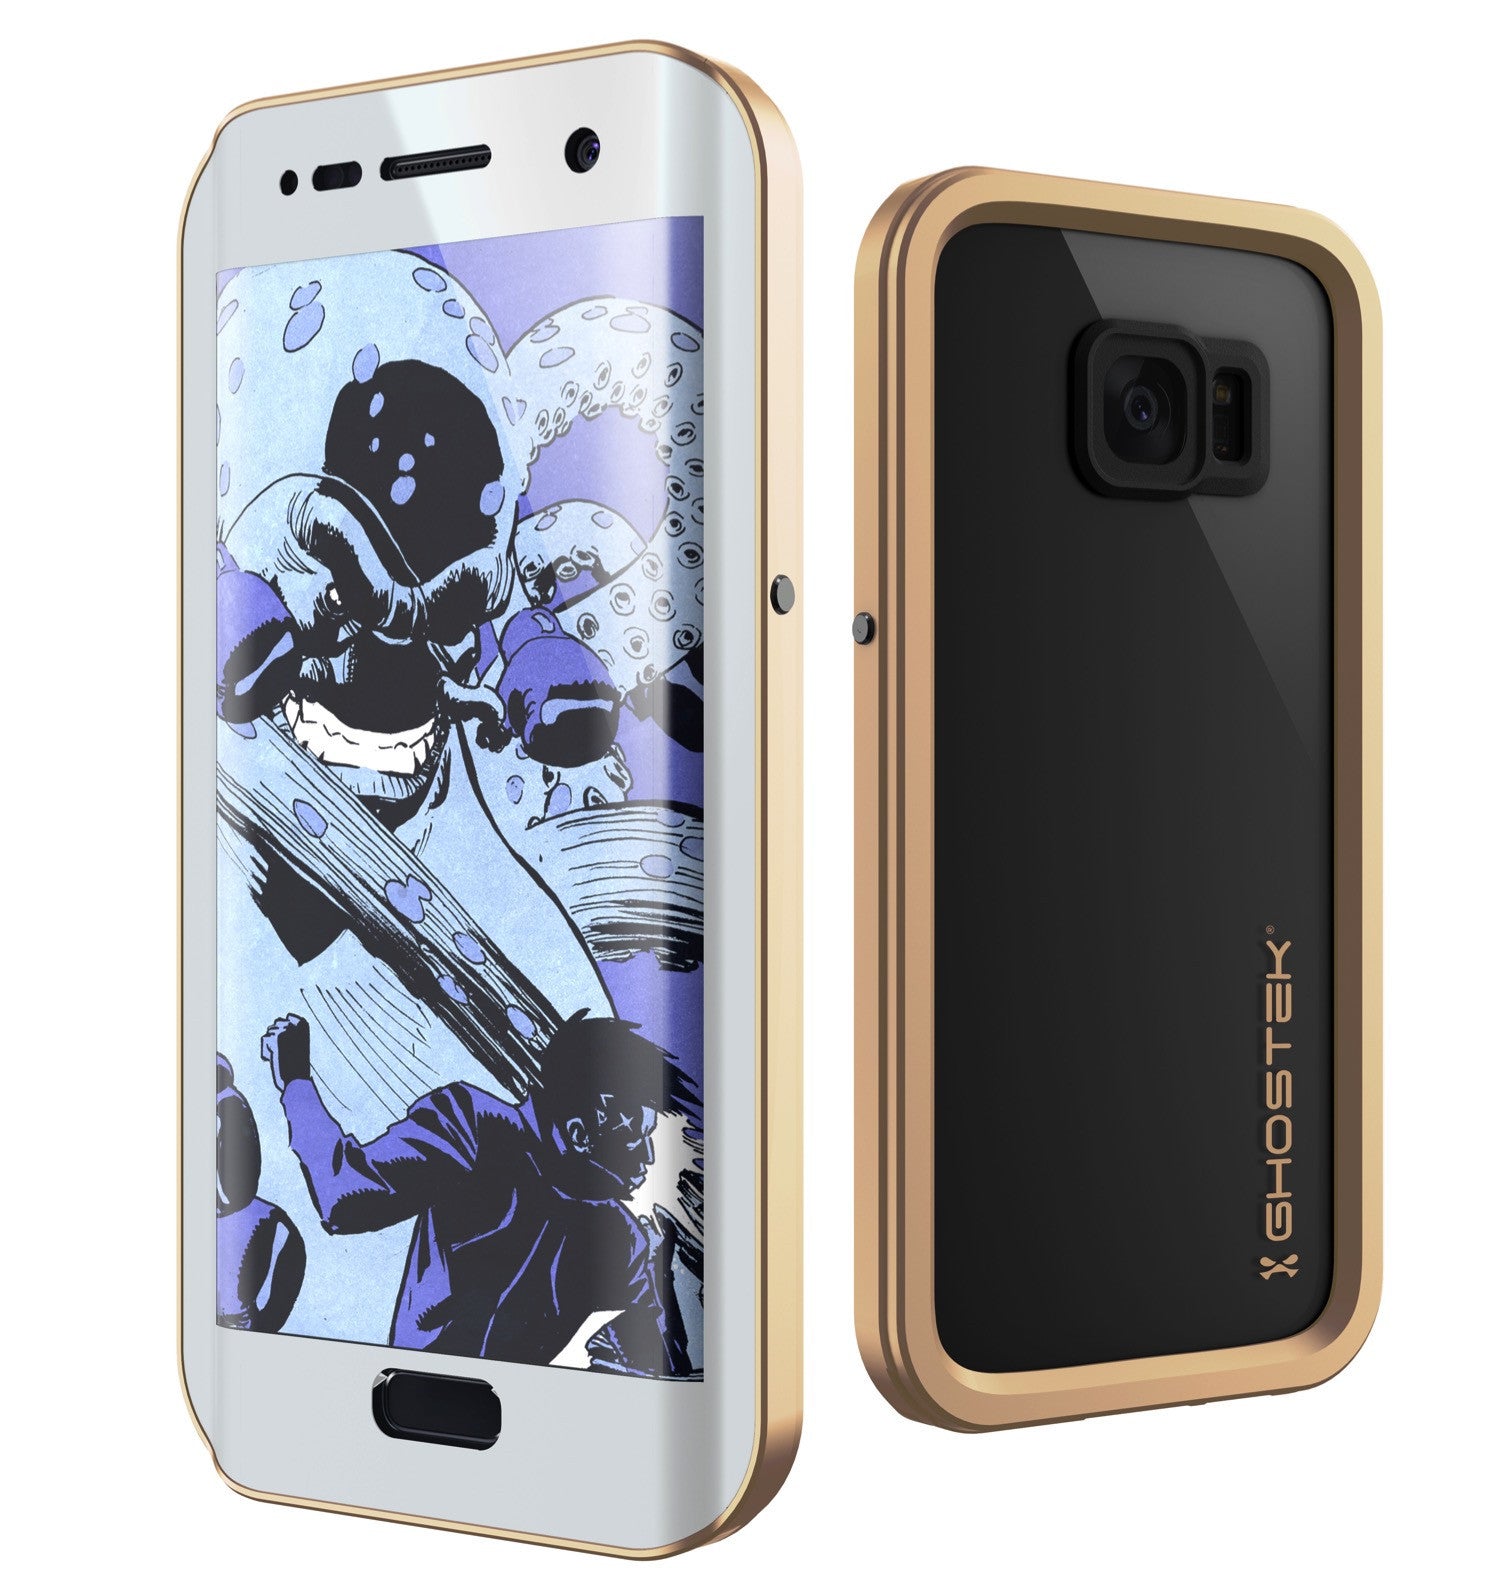 Galaxy S7 EDGE Waterproof Case, Ghostek Atomic 2.0 Gold Shock/Dirt/Snow Proof | Lifetime Warranty (Color in image: Gold)